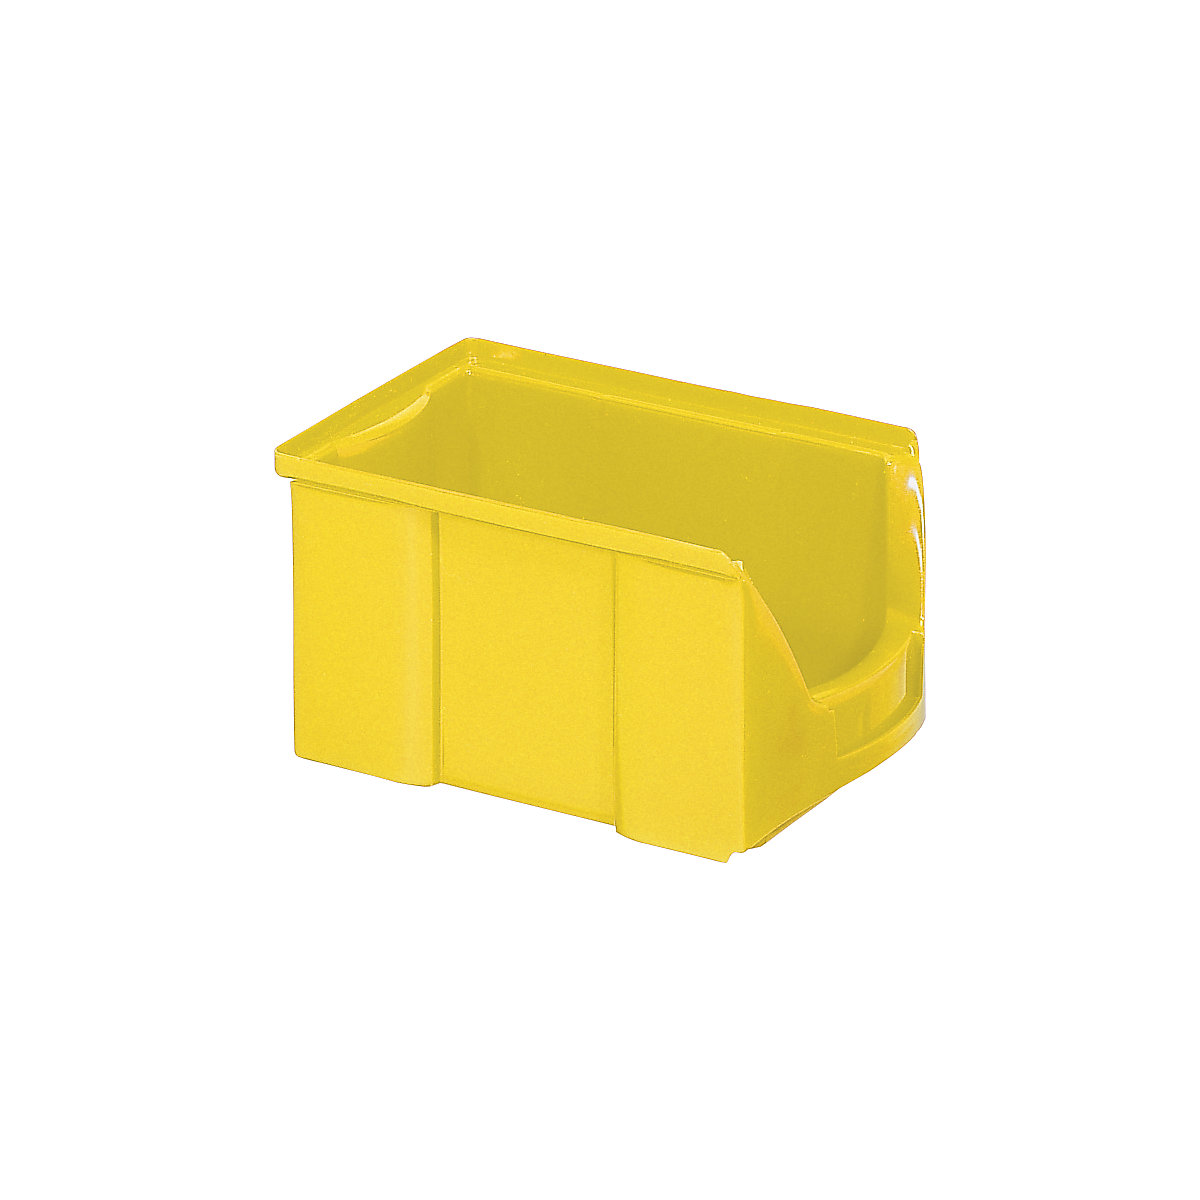 FUTURA-magazijnbak van polyethyleen, l x b x h = 229 x 148 x 122 mm, VE = 25 stuks, geel-15